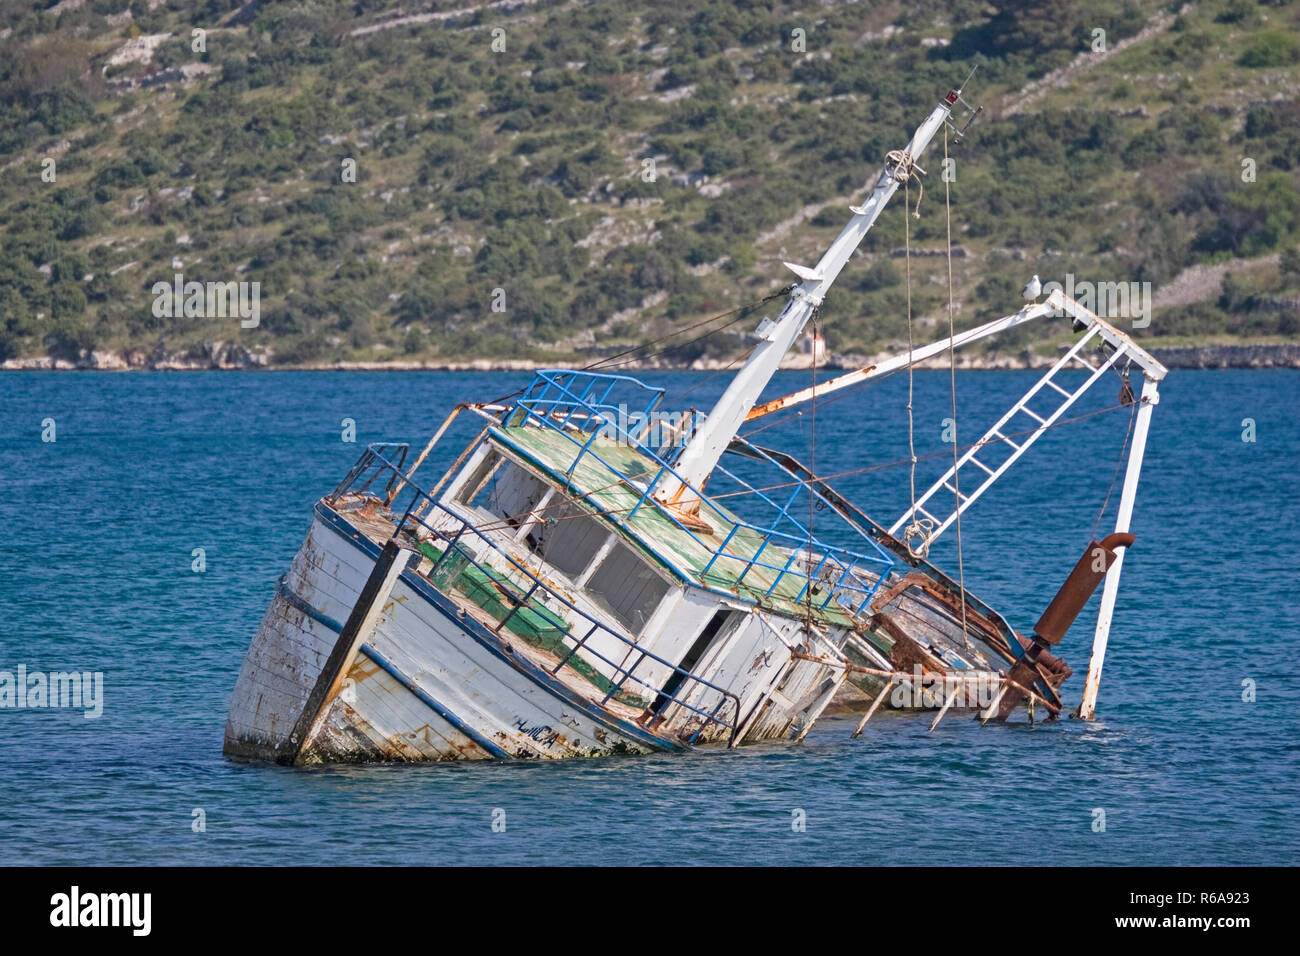 Capsized Trawler In A Bay On The Dalmatian Coast Stock Photo